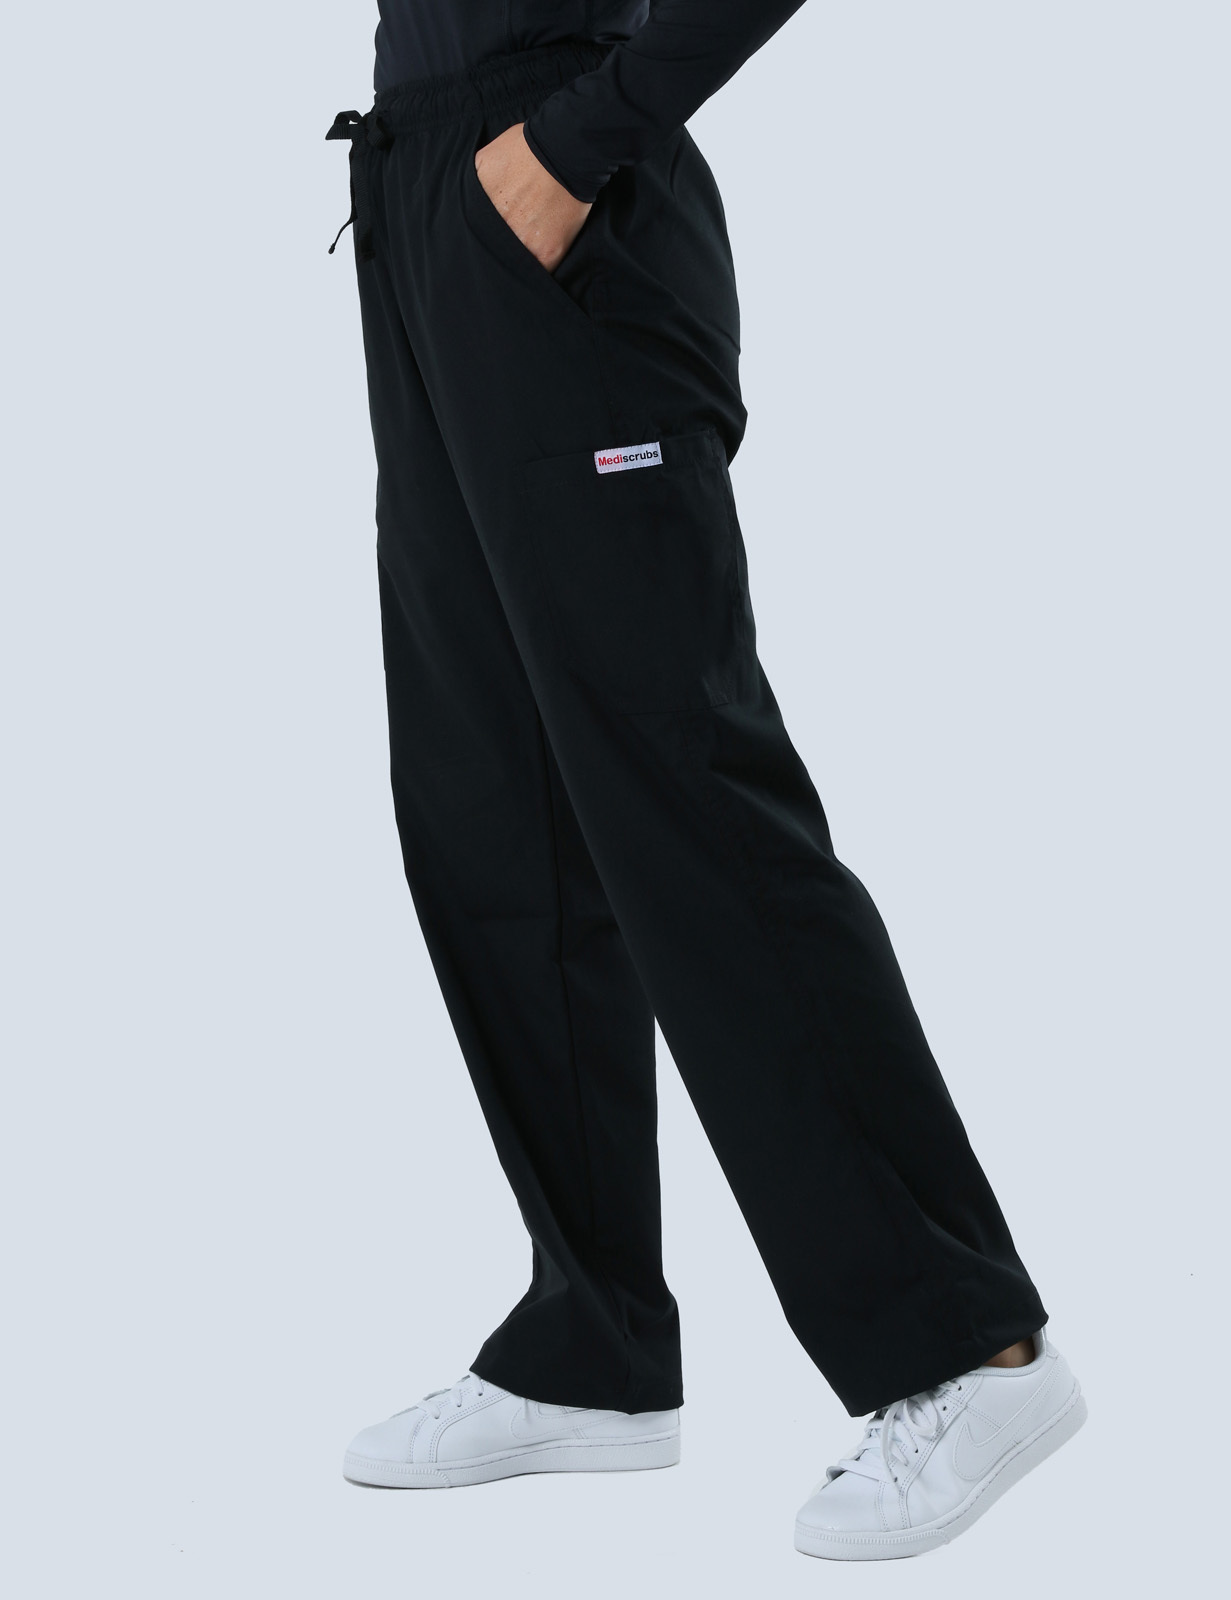 Canberra Hospital Medical Imaging Doctor  Uniform Set Bundle (Women's Fit Spandex Top and Cargo Pants in Black + Logos)